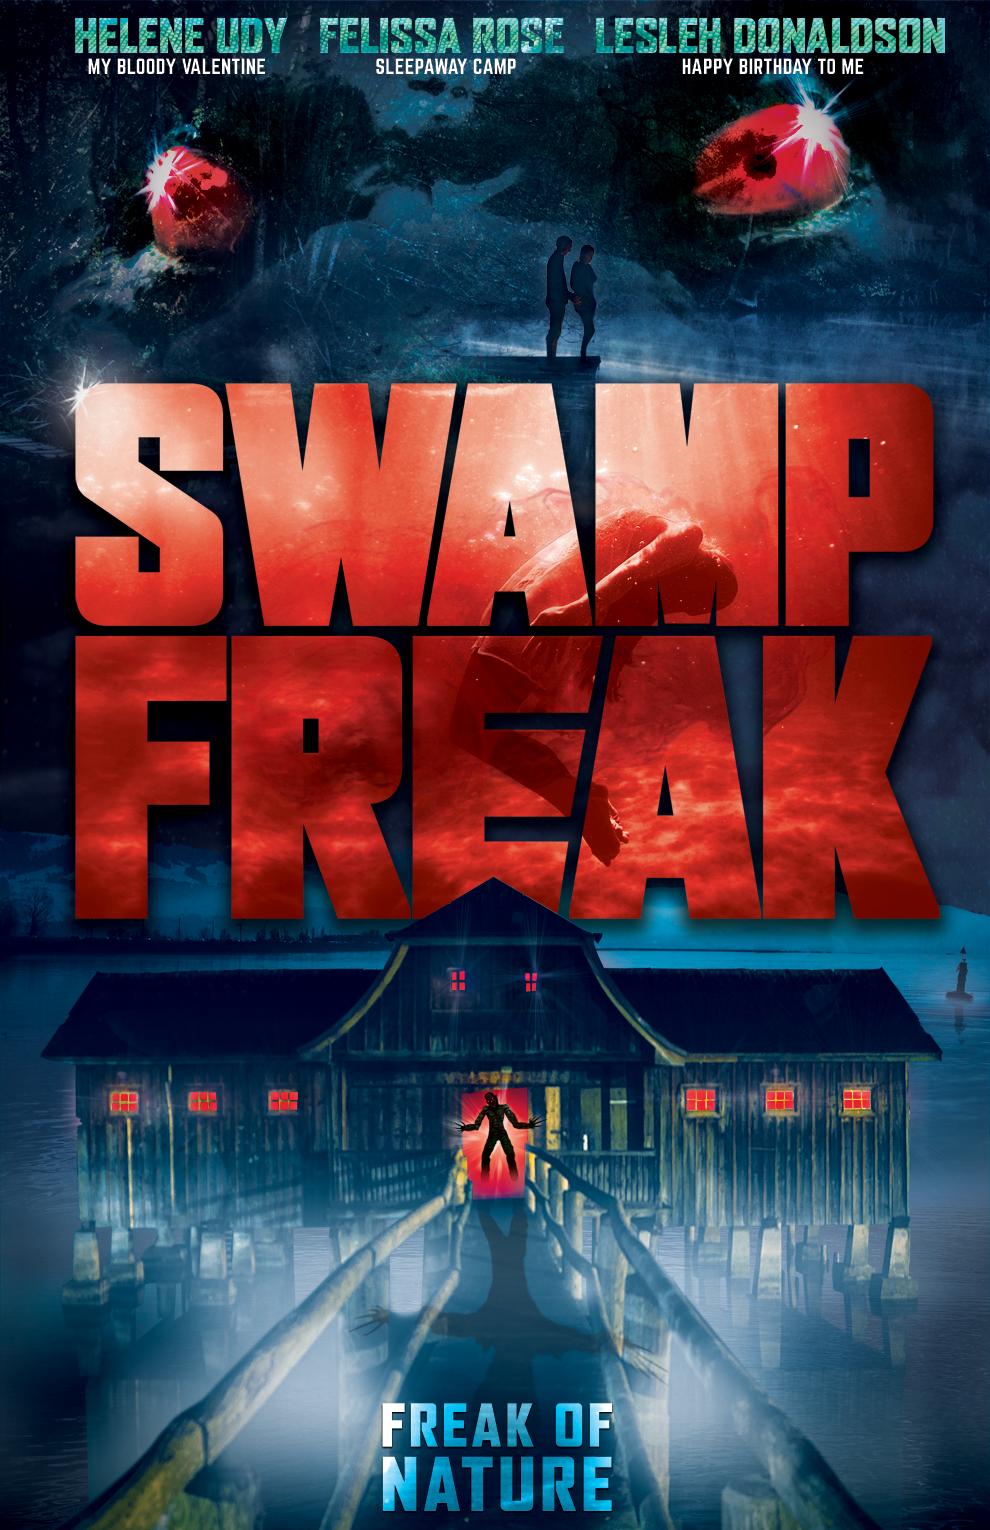 Nonton film Swamp Freak layarkaca21 indoxx1 ganool online streaming terbaru